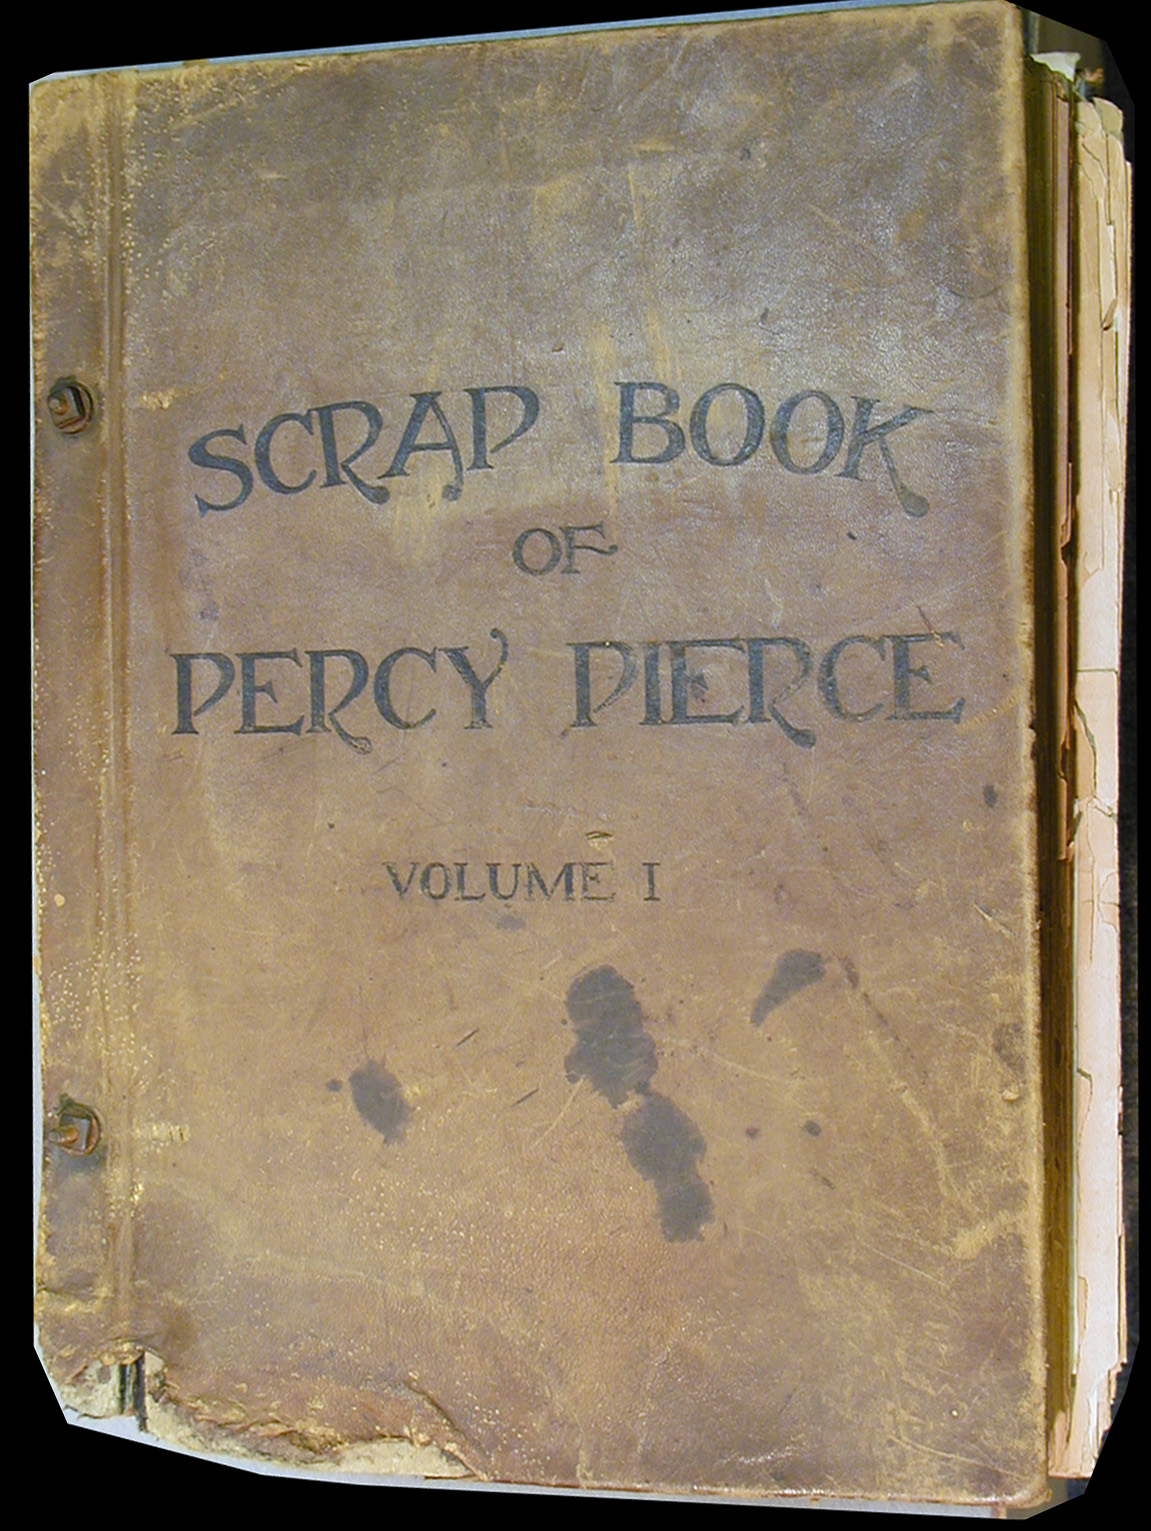 Percy Pierce scrapbook cover 2.jpg